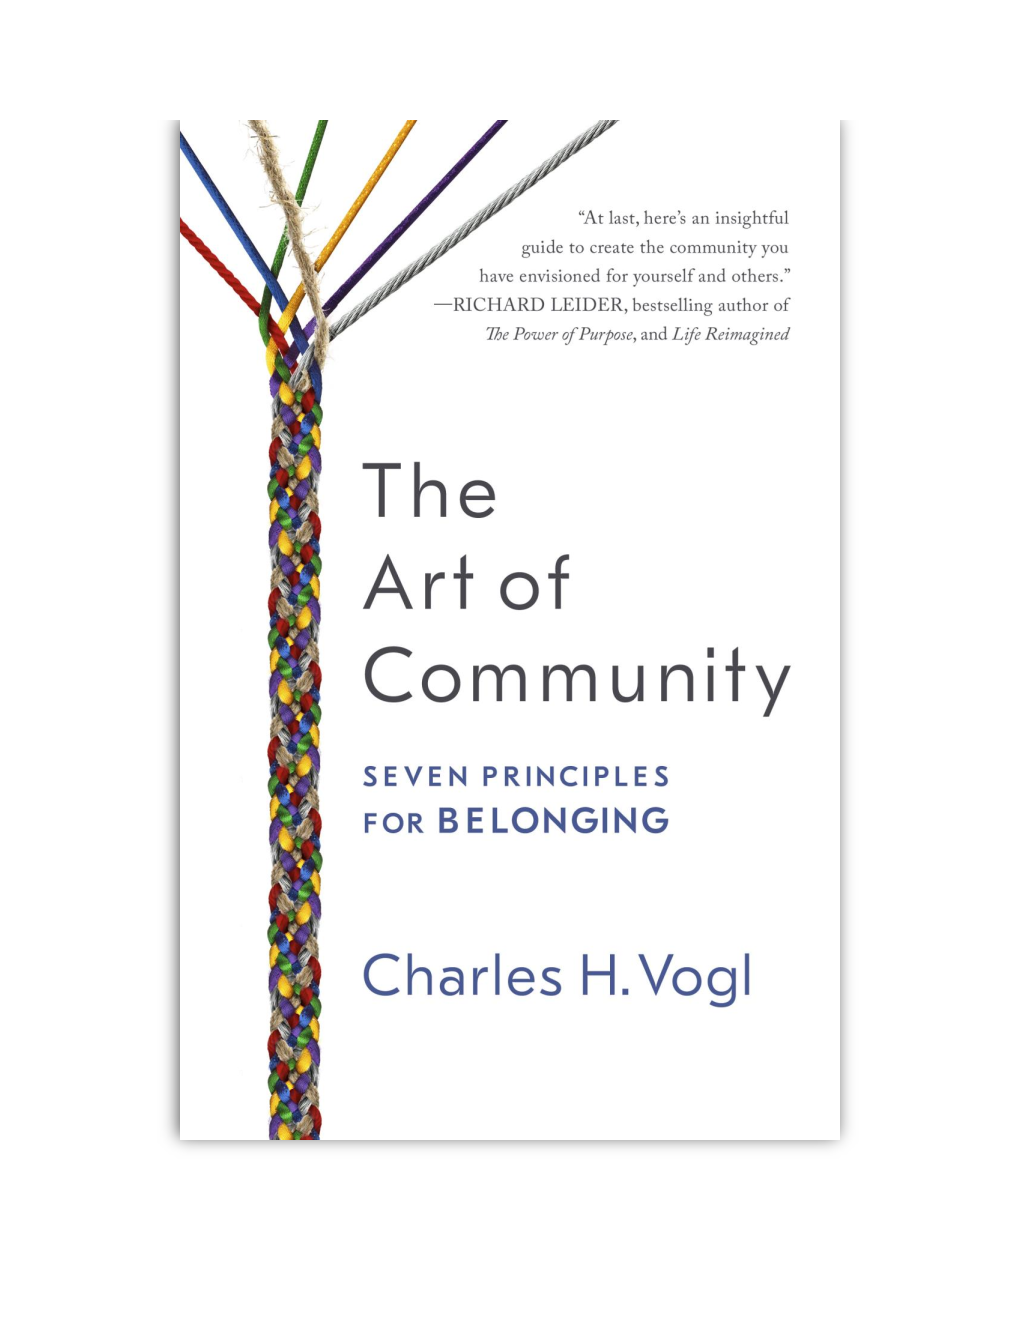 The Art of Community Seven Principles for Belonging